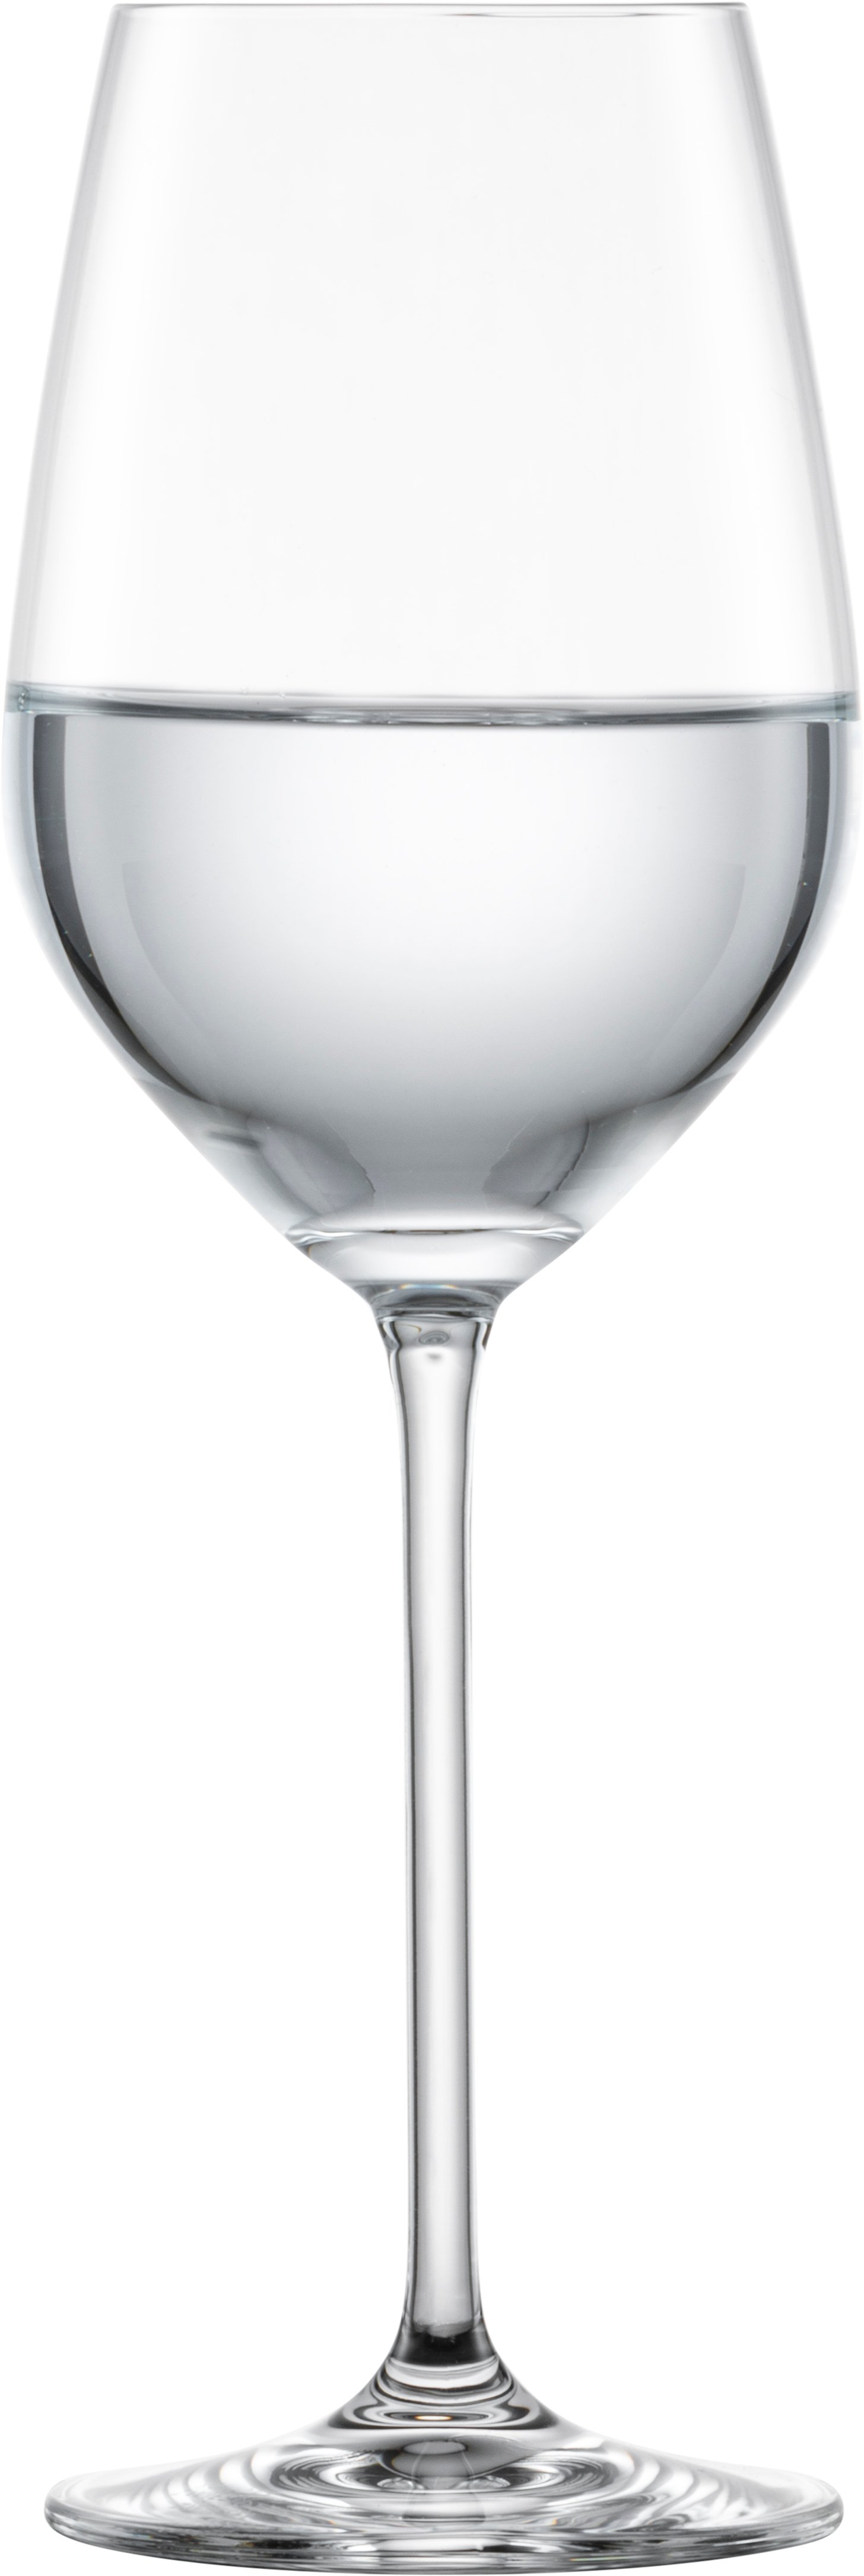 Schott Zwiesel Water glass / red wine glass Viña